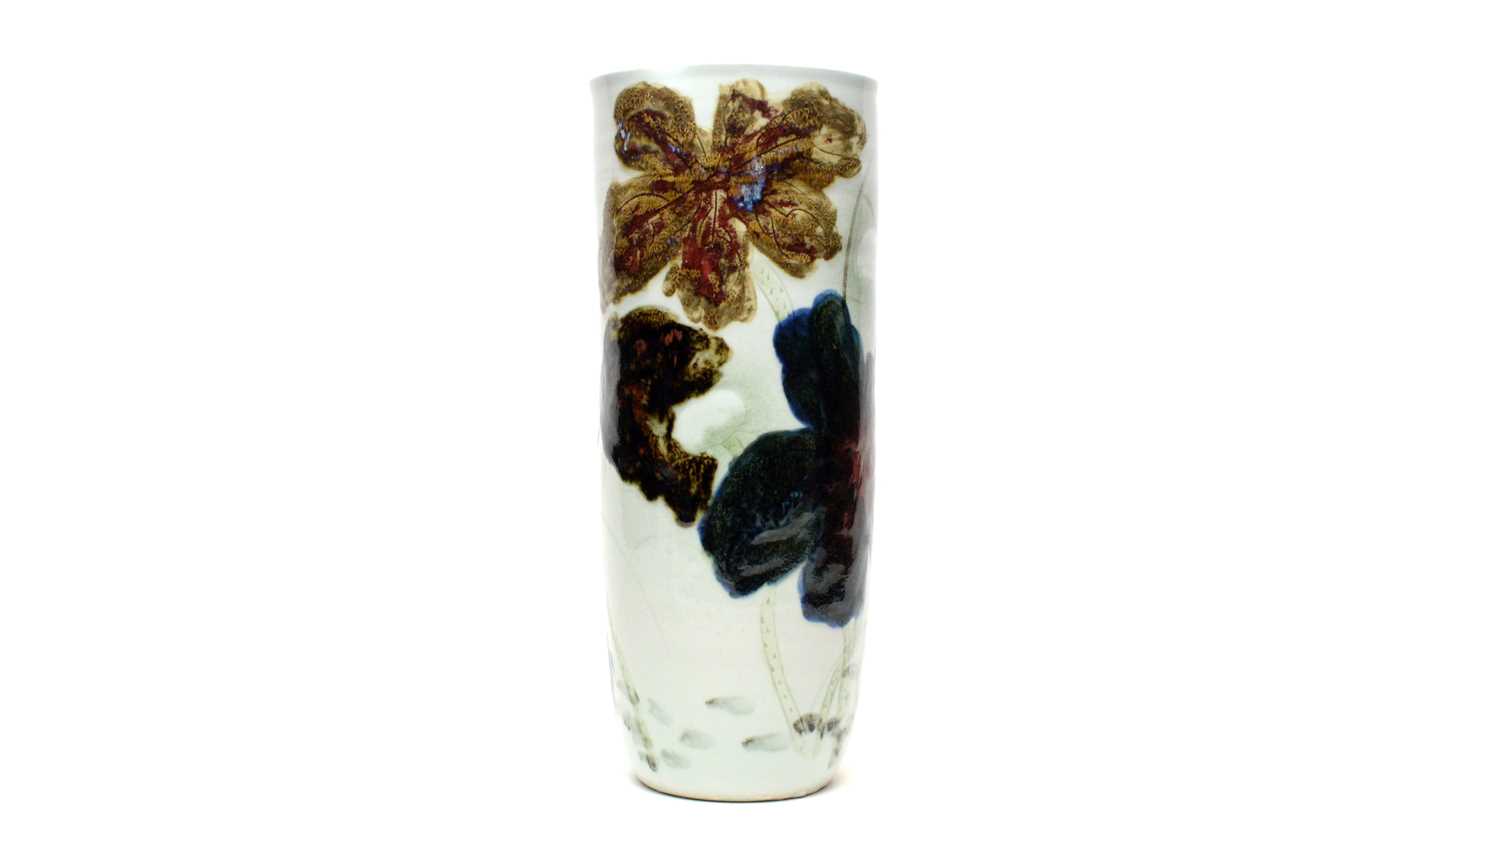 Lot 846 - Chinese 'Aquatic plants' cylindrical shape vase